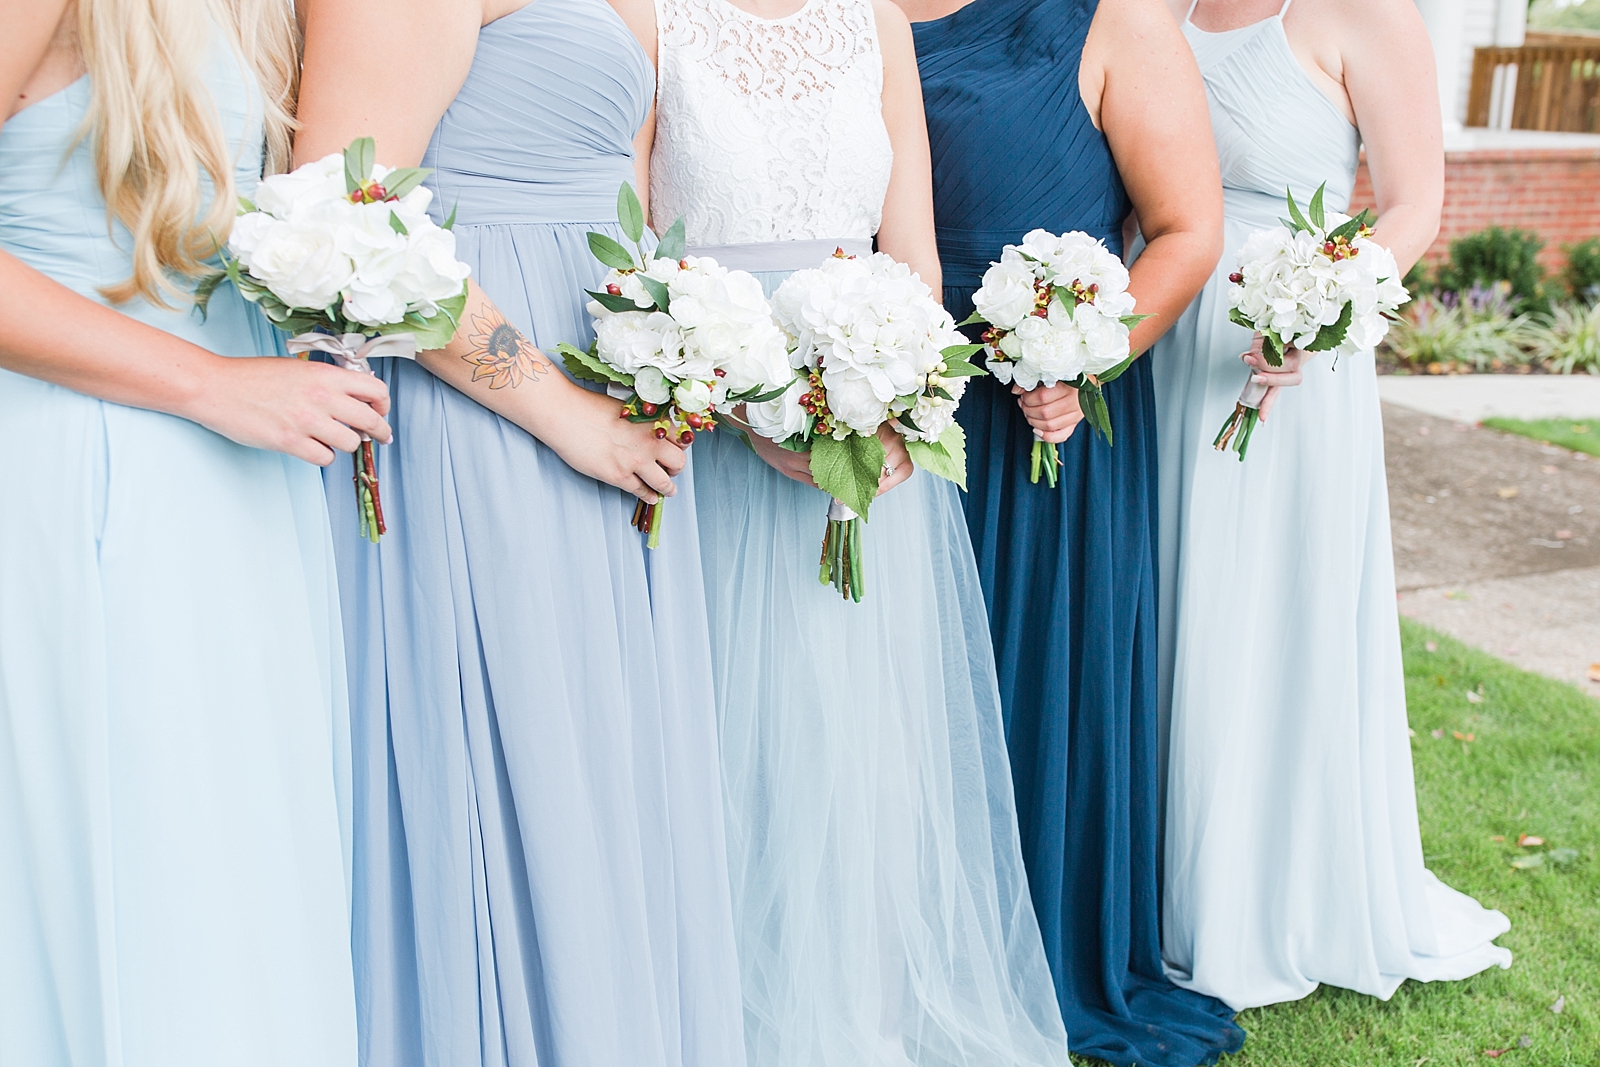 Dahlonega Wedding Venue Bridal Party Detail of Blue Dresses and Bouquets Photo